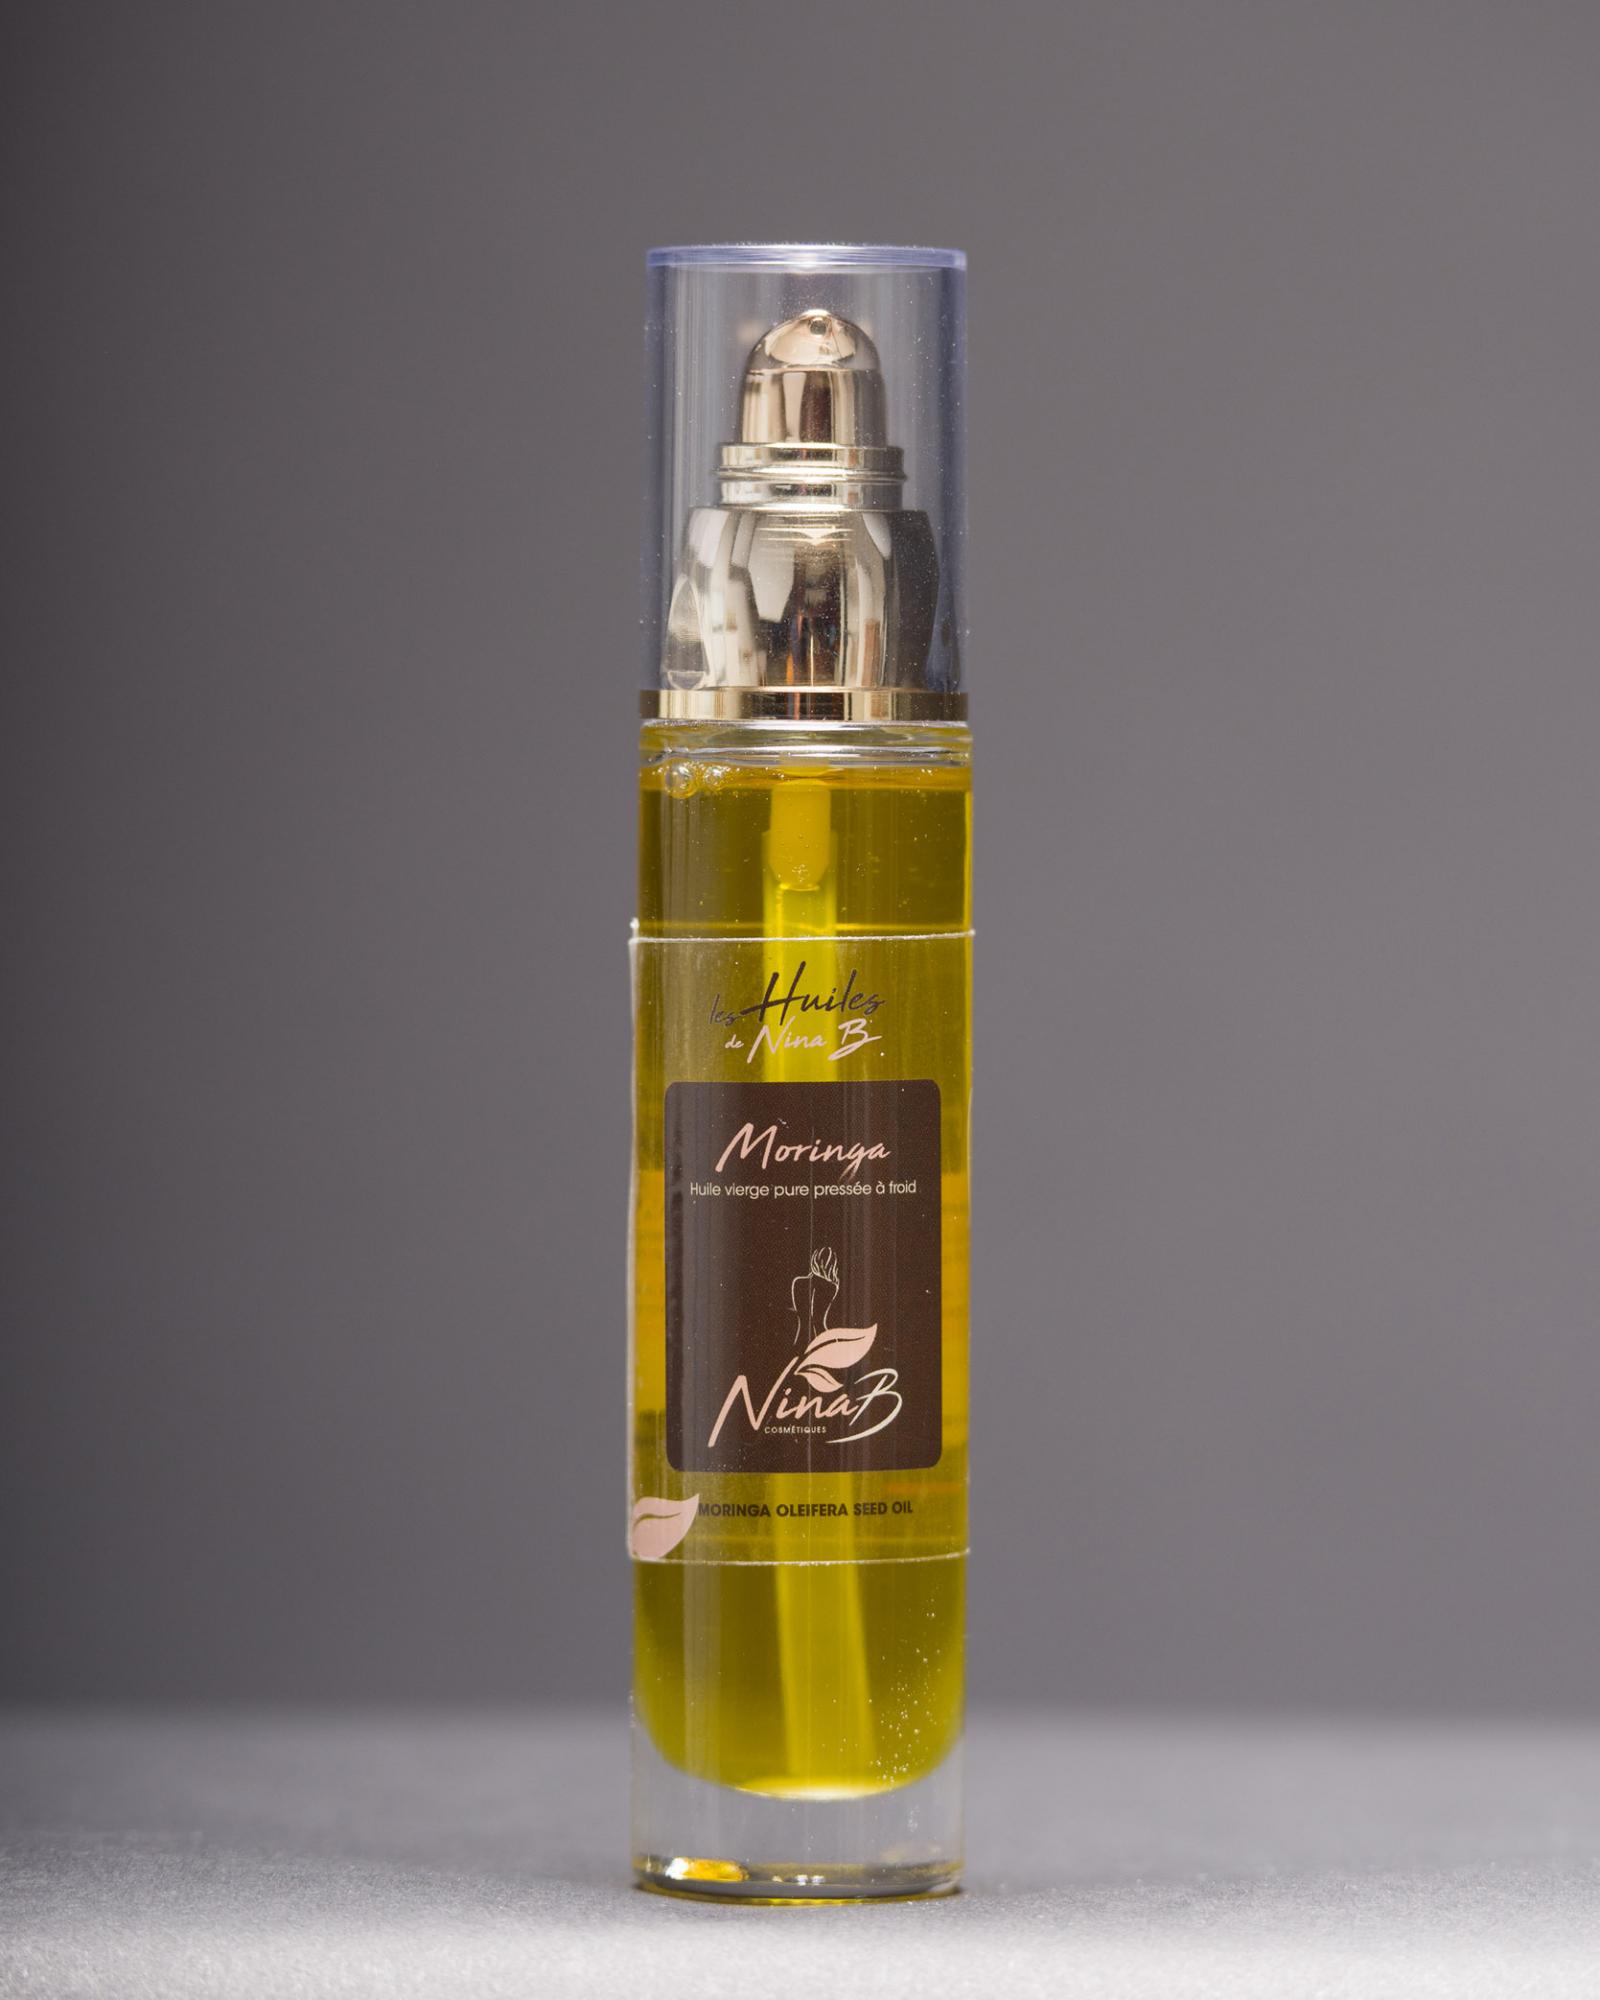 Virgin Moringa Oil Organic - Natural, organic cosmetic product, certified ECOCERT COSMOS ORGANIC